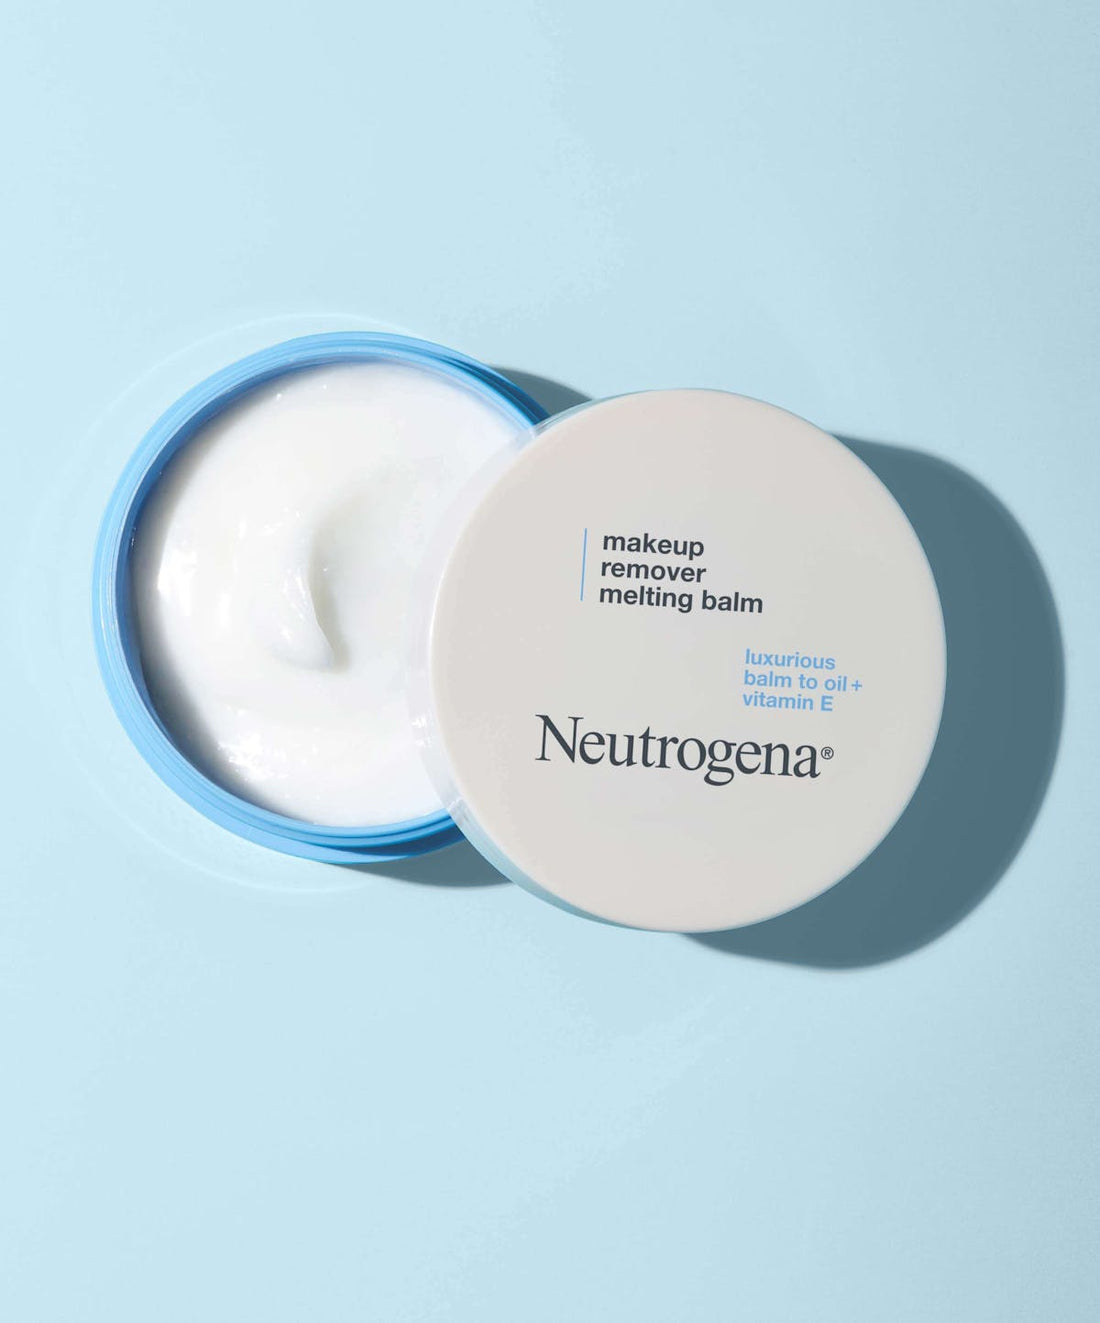 Makeup Remover Melting Balm - Neutrogena.